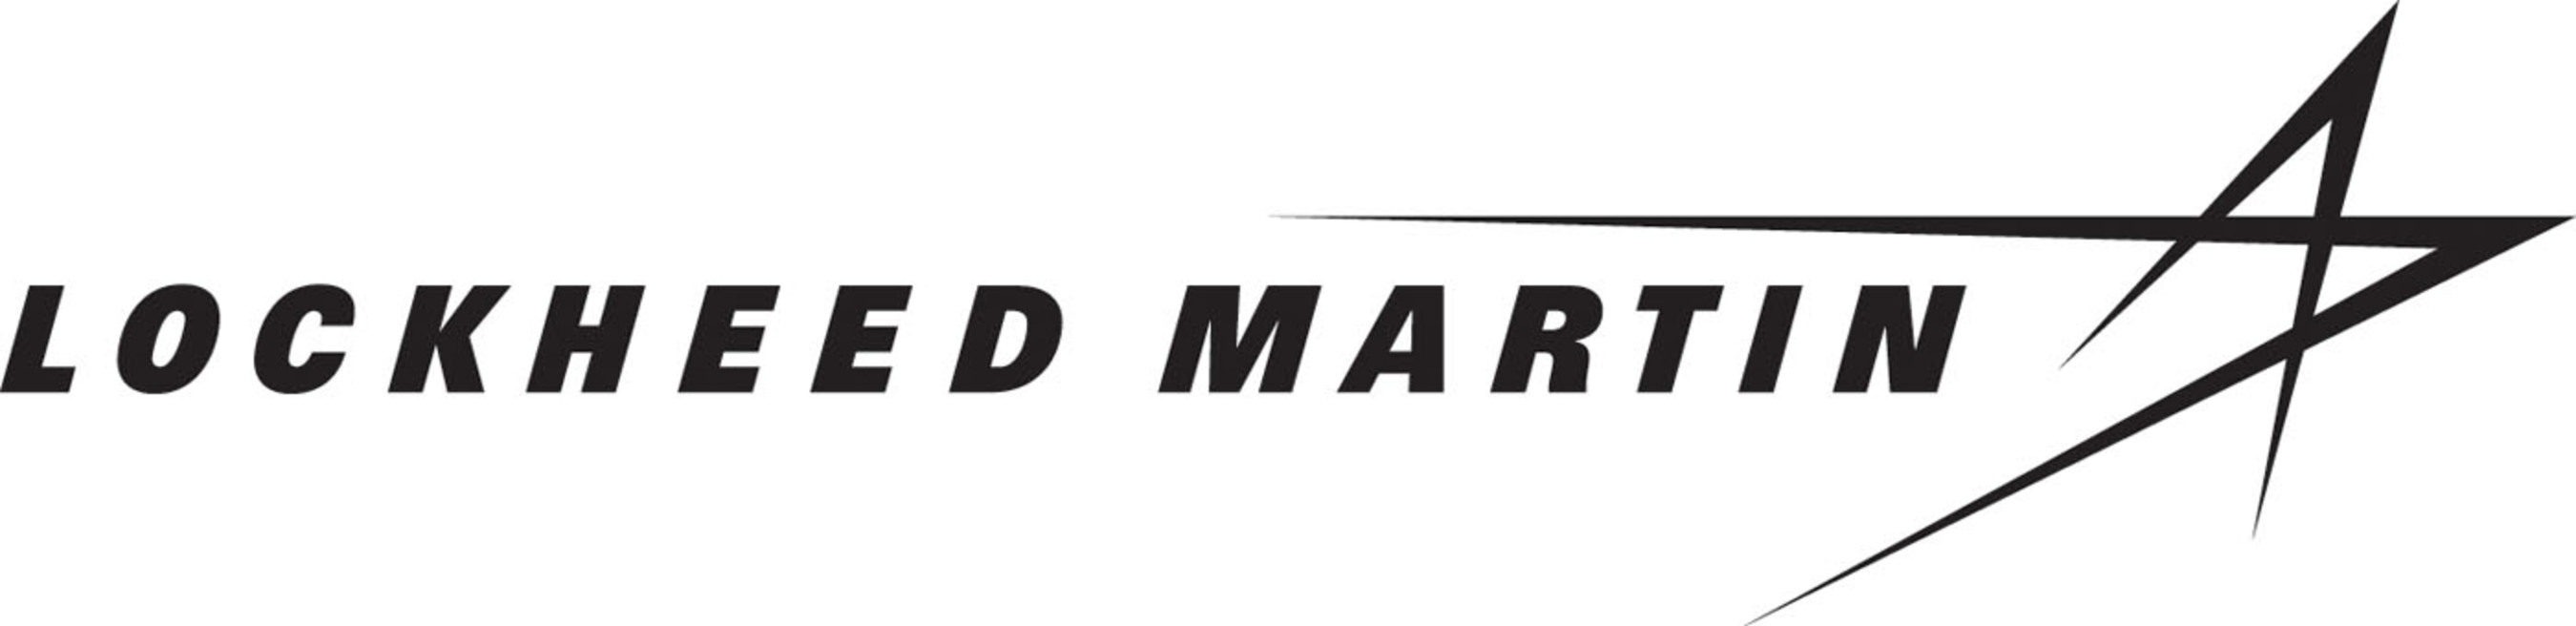 Lockheed Martin Logo. (PRNewsFoto/Lockheed Martin) (PRNewsFoto/LOCKHEED MARTIN) (PRNewsFoto/LOCKHEED MARTIN) (PRNewsFoto/LOCKHEED MARTIN)